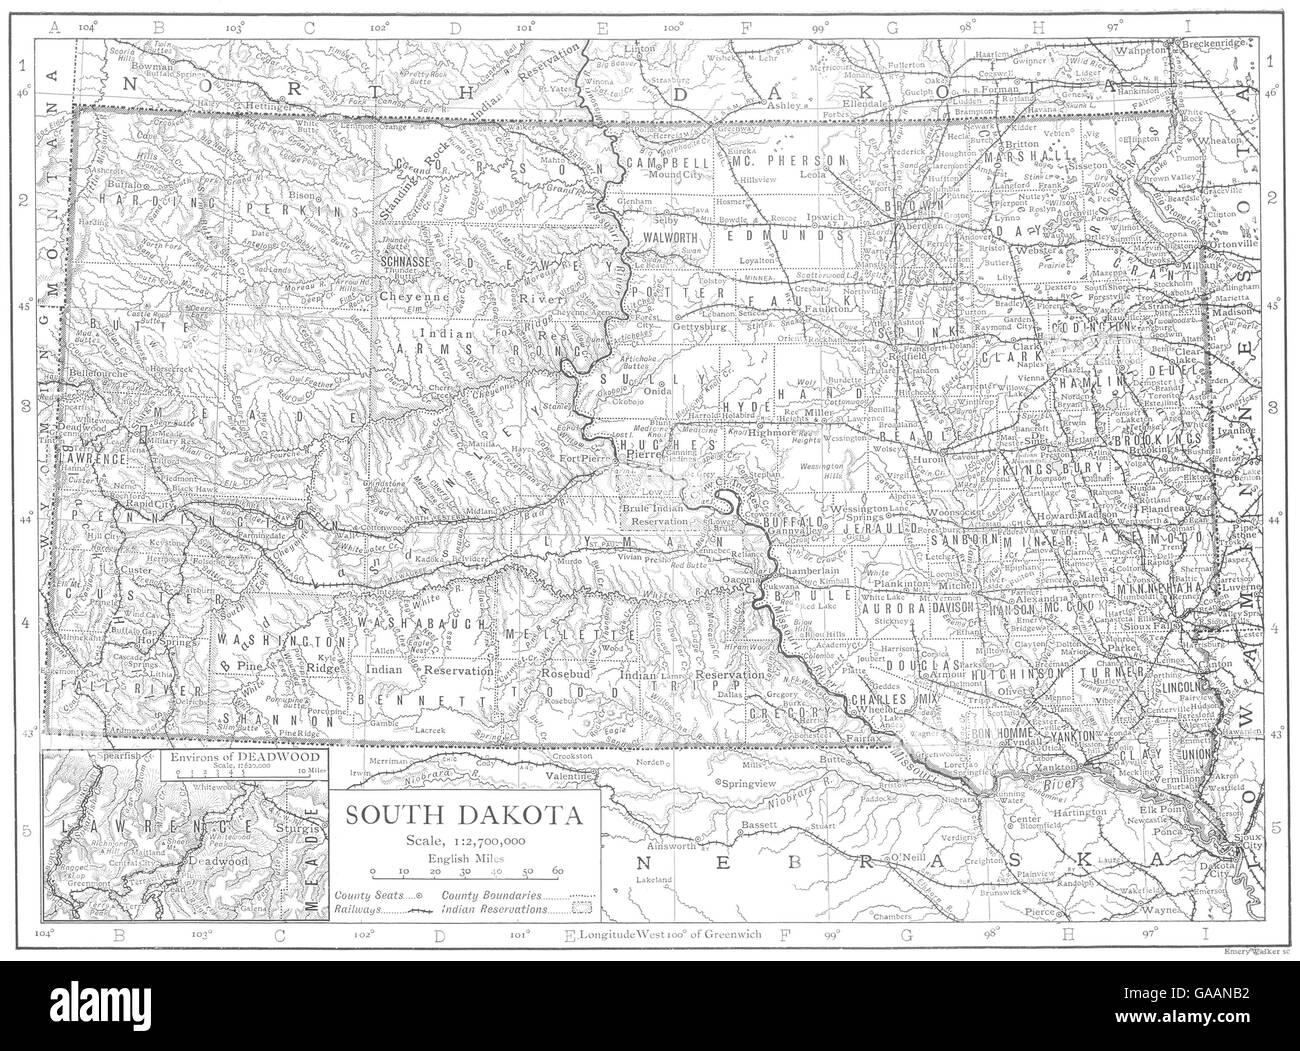 SOUTH DAKOTA: South Dakota state map showing counties; Inset Deadwood, 1910 Stock Photo